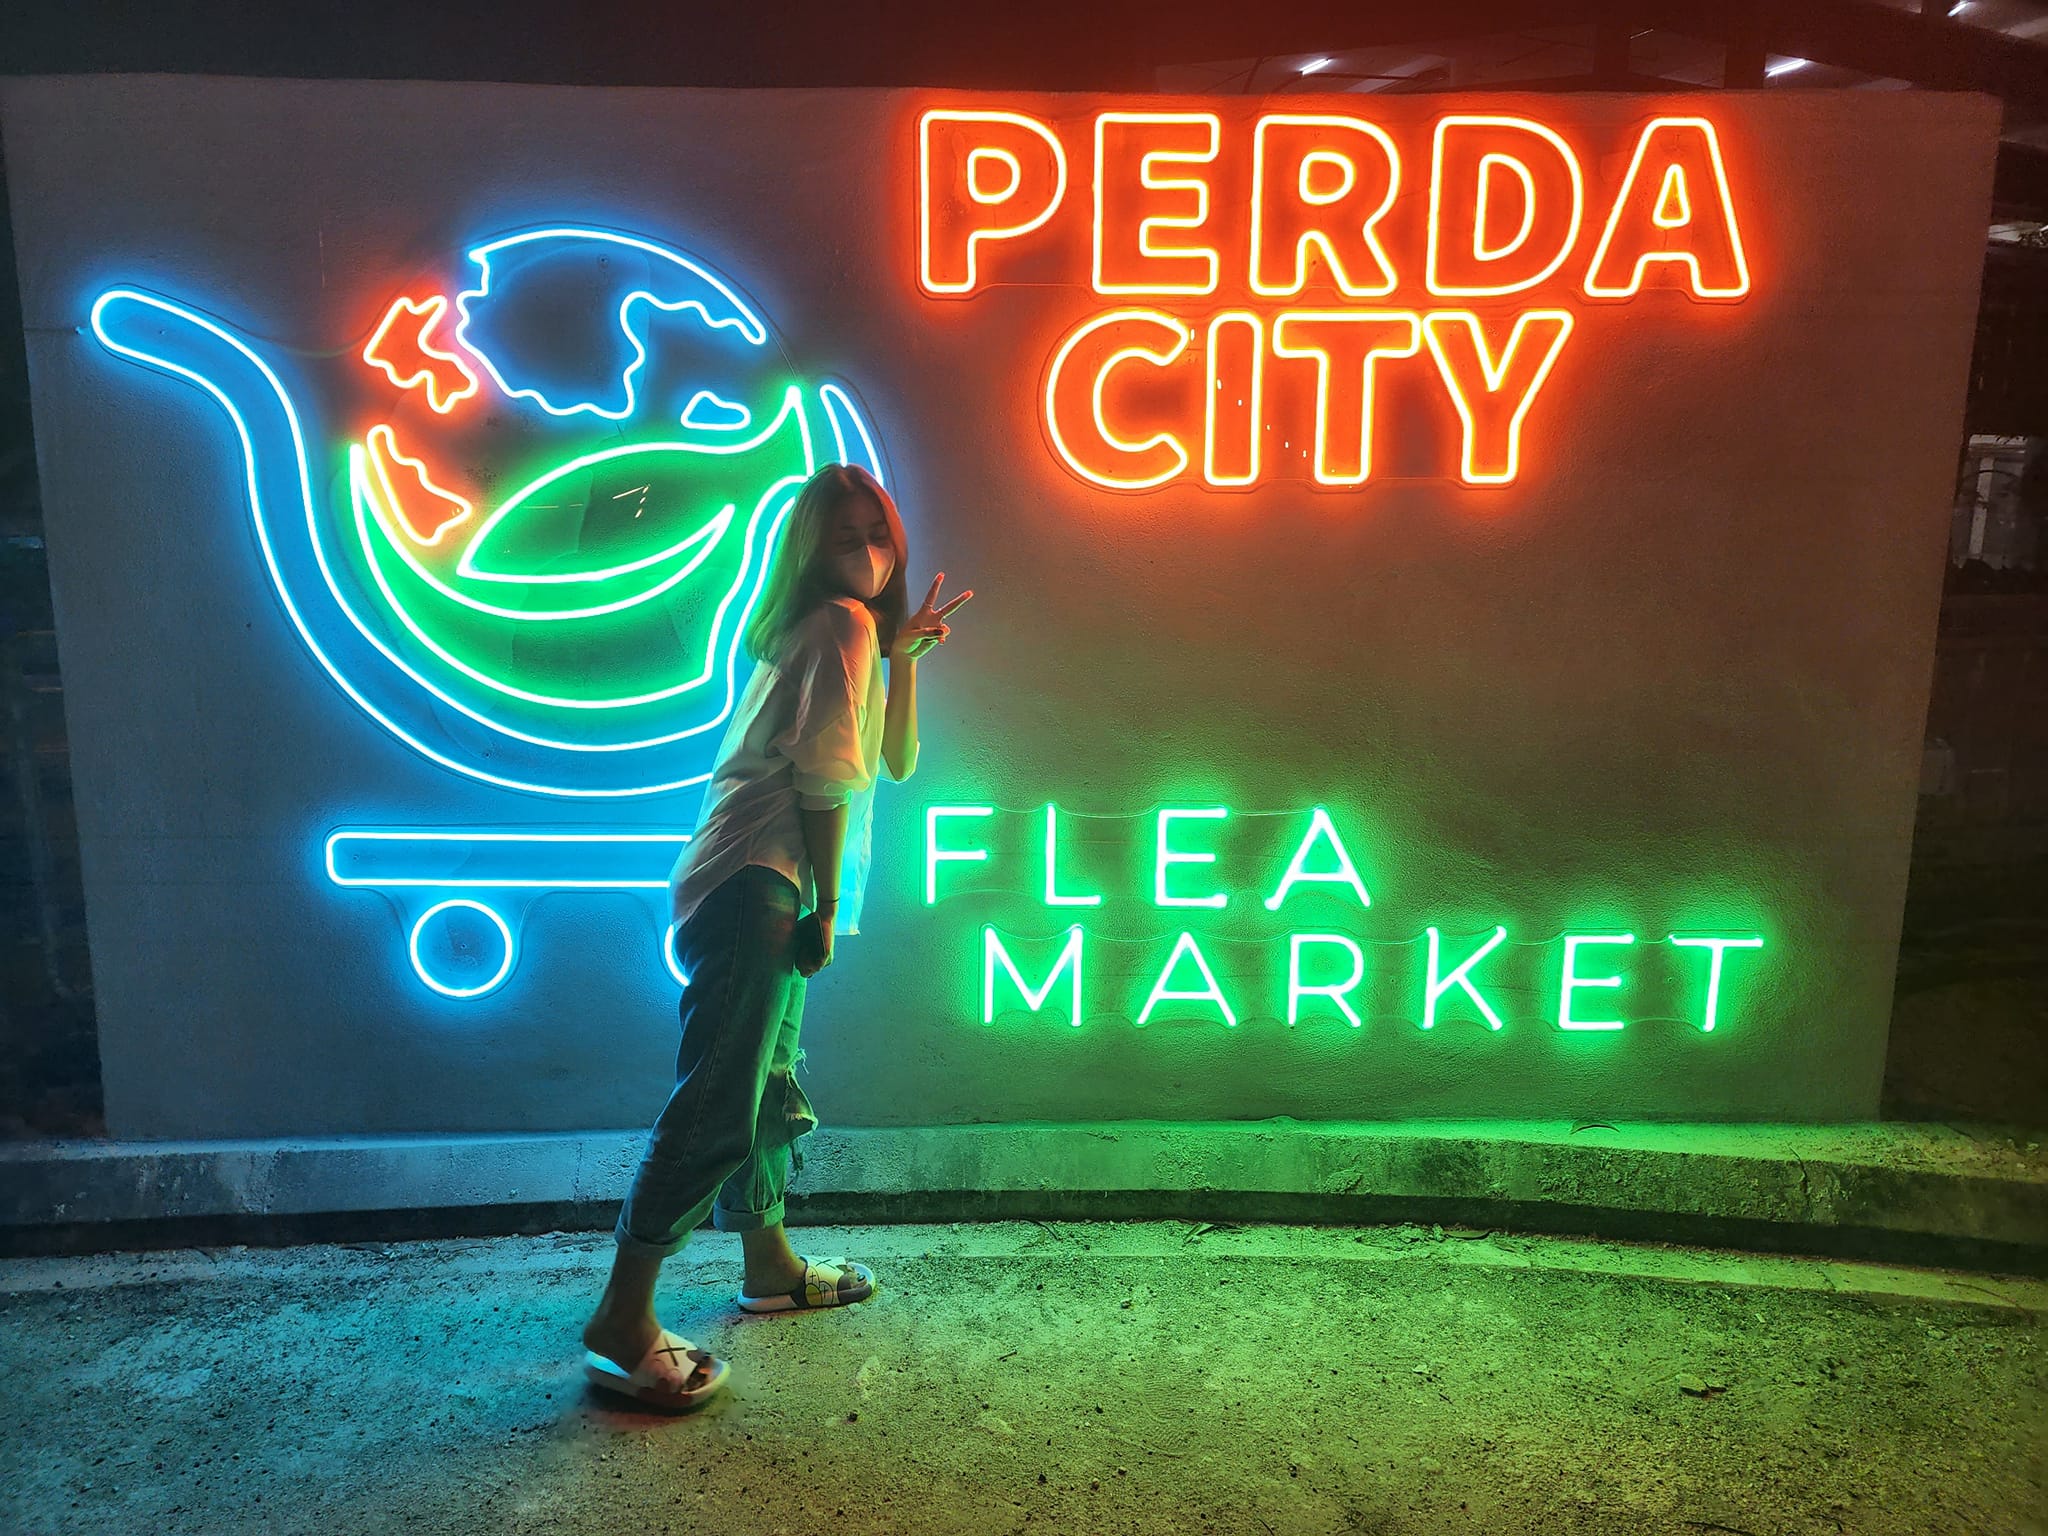 Perda City Flea Market - sign